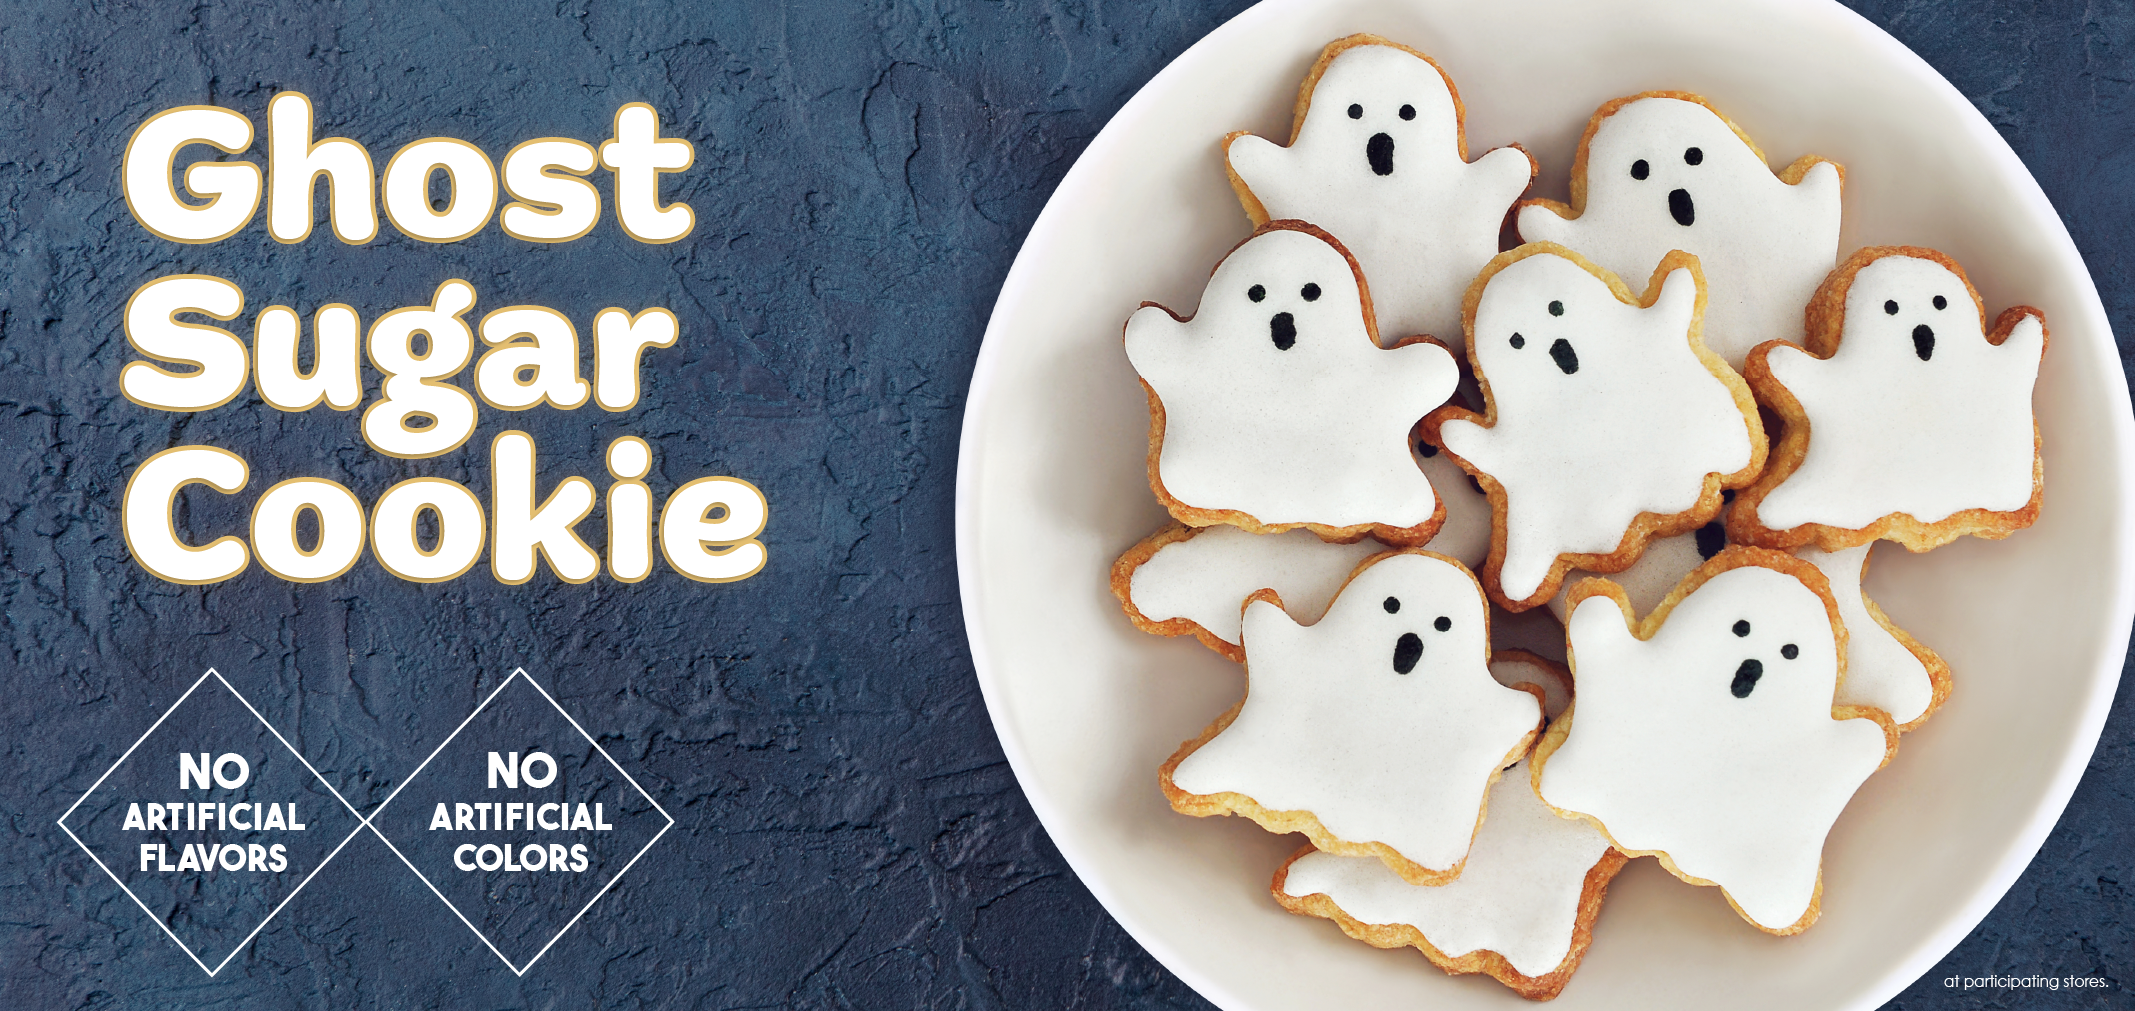 Ghost Sugar Cookie label image